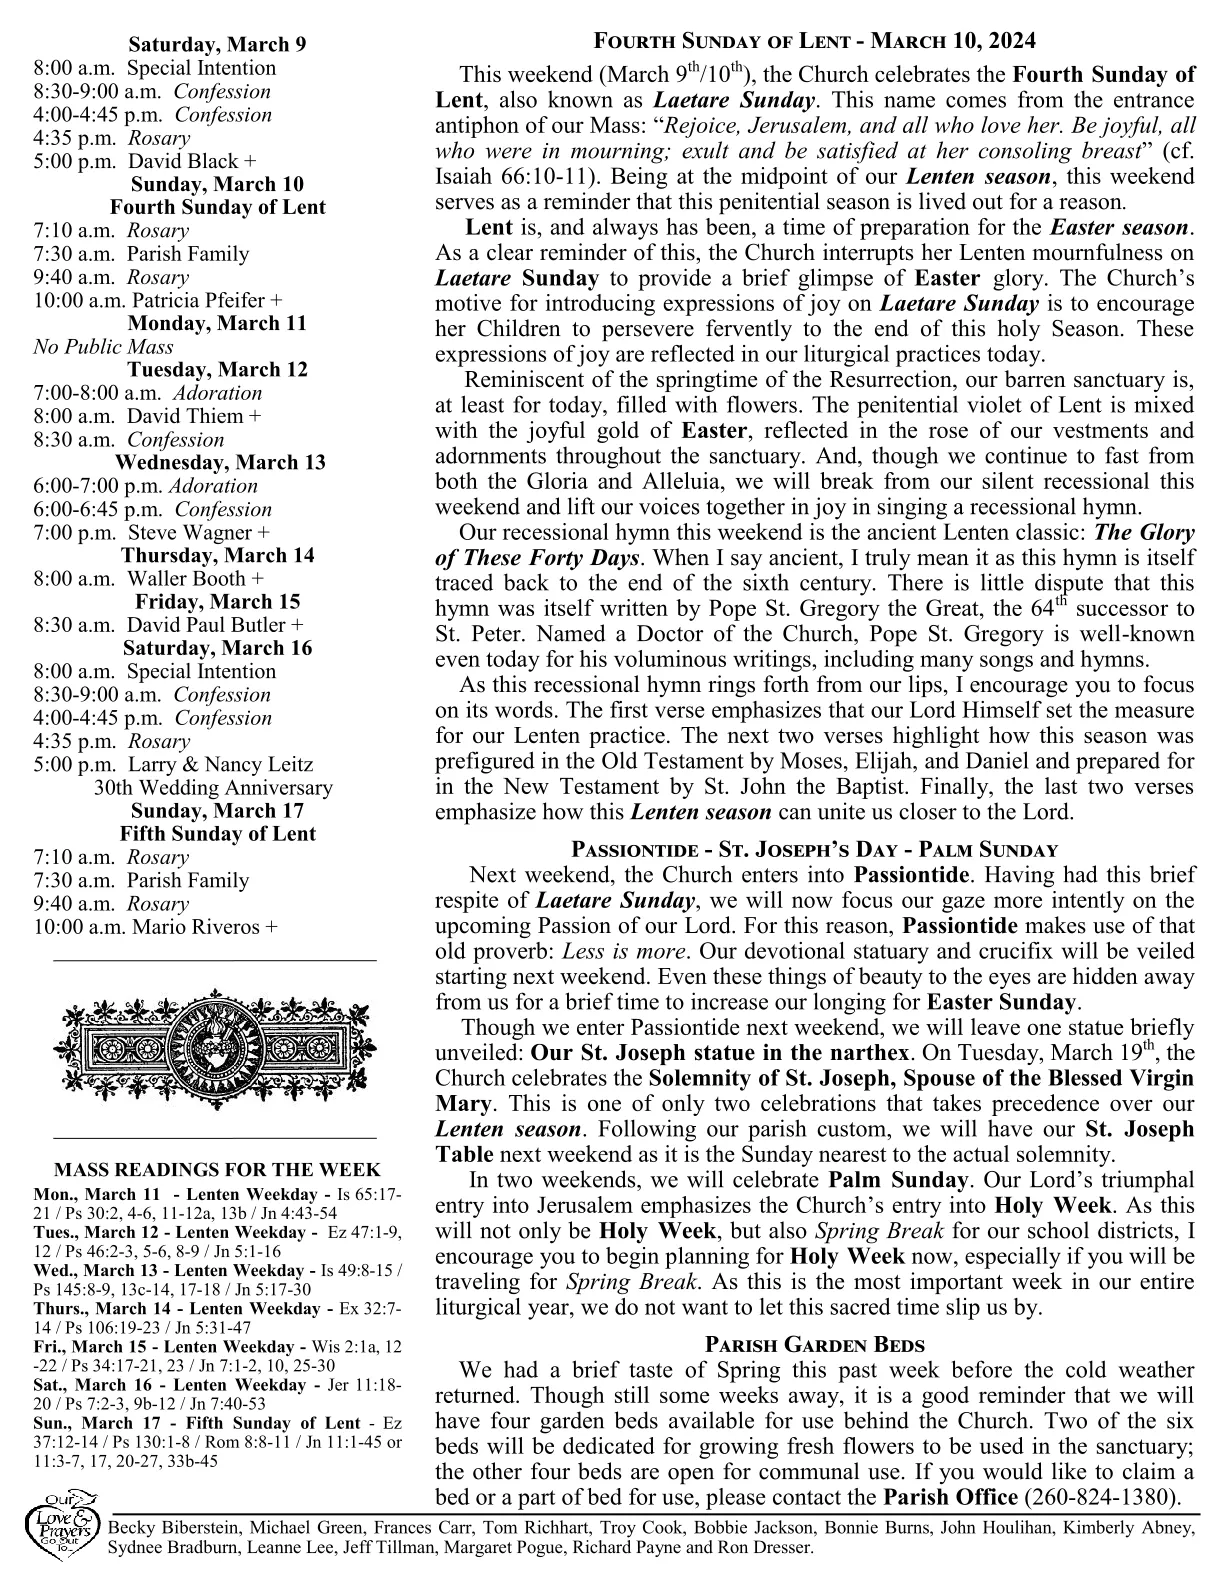 Mar 10, 2024 - Bulletin - Page 2